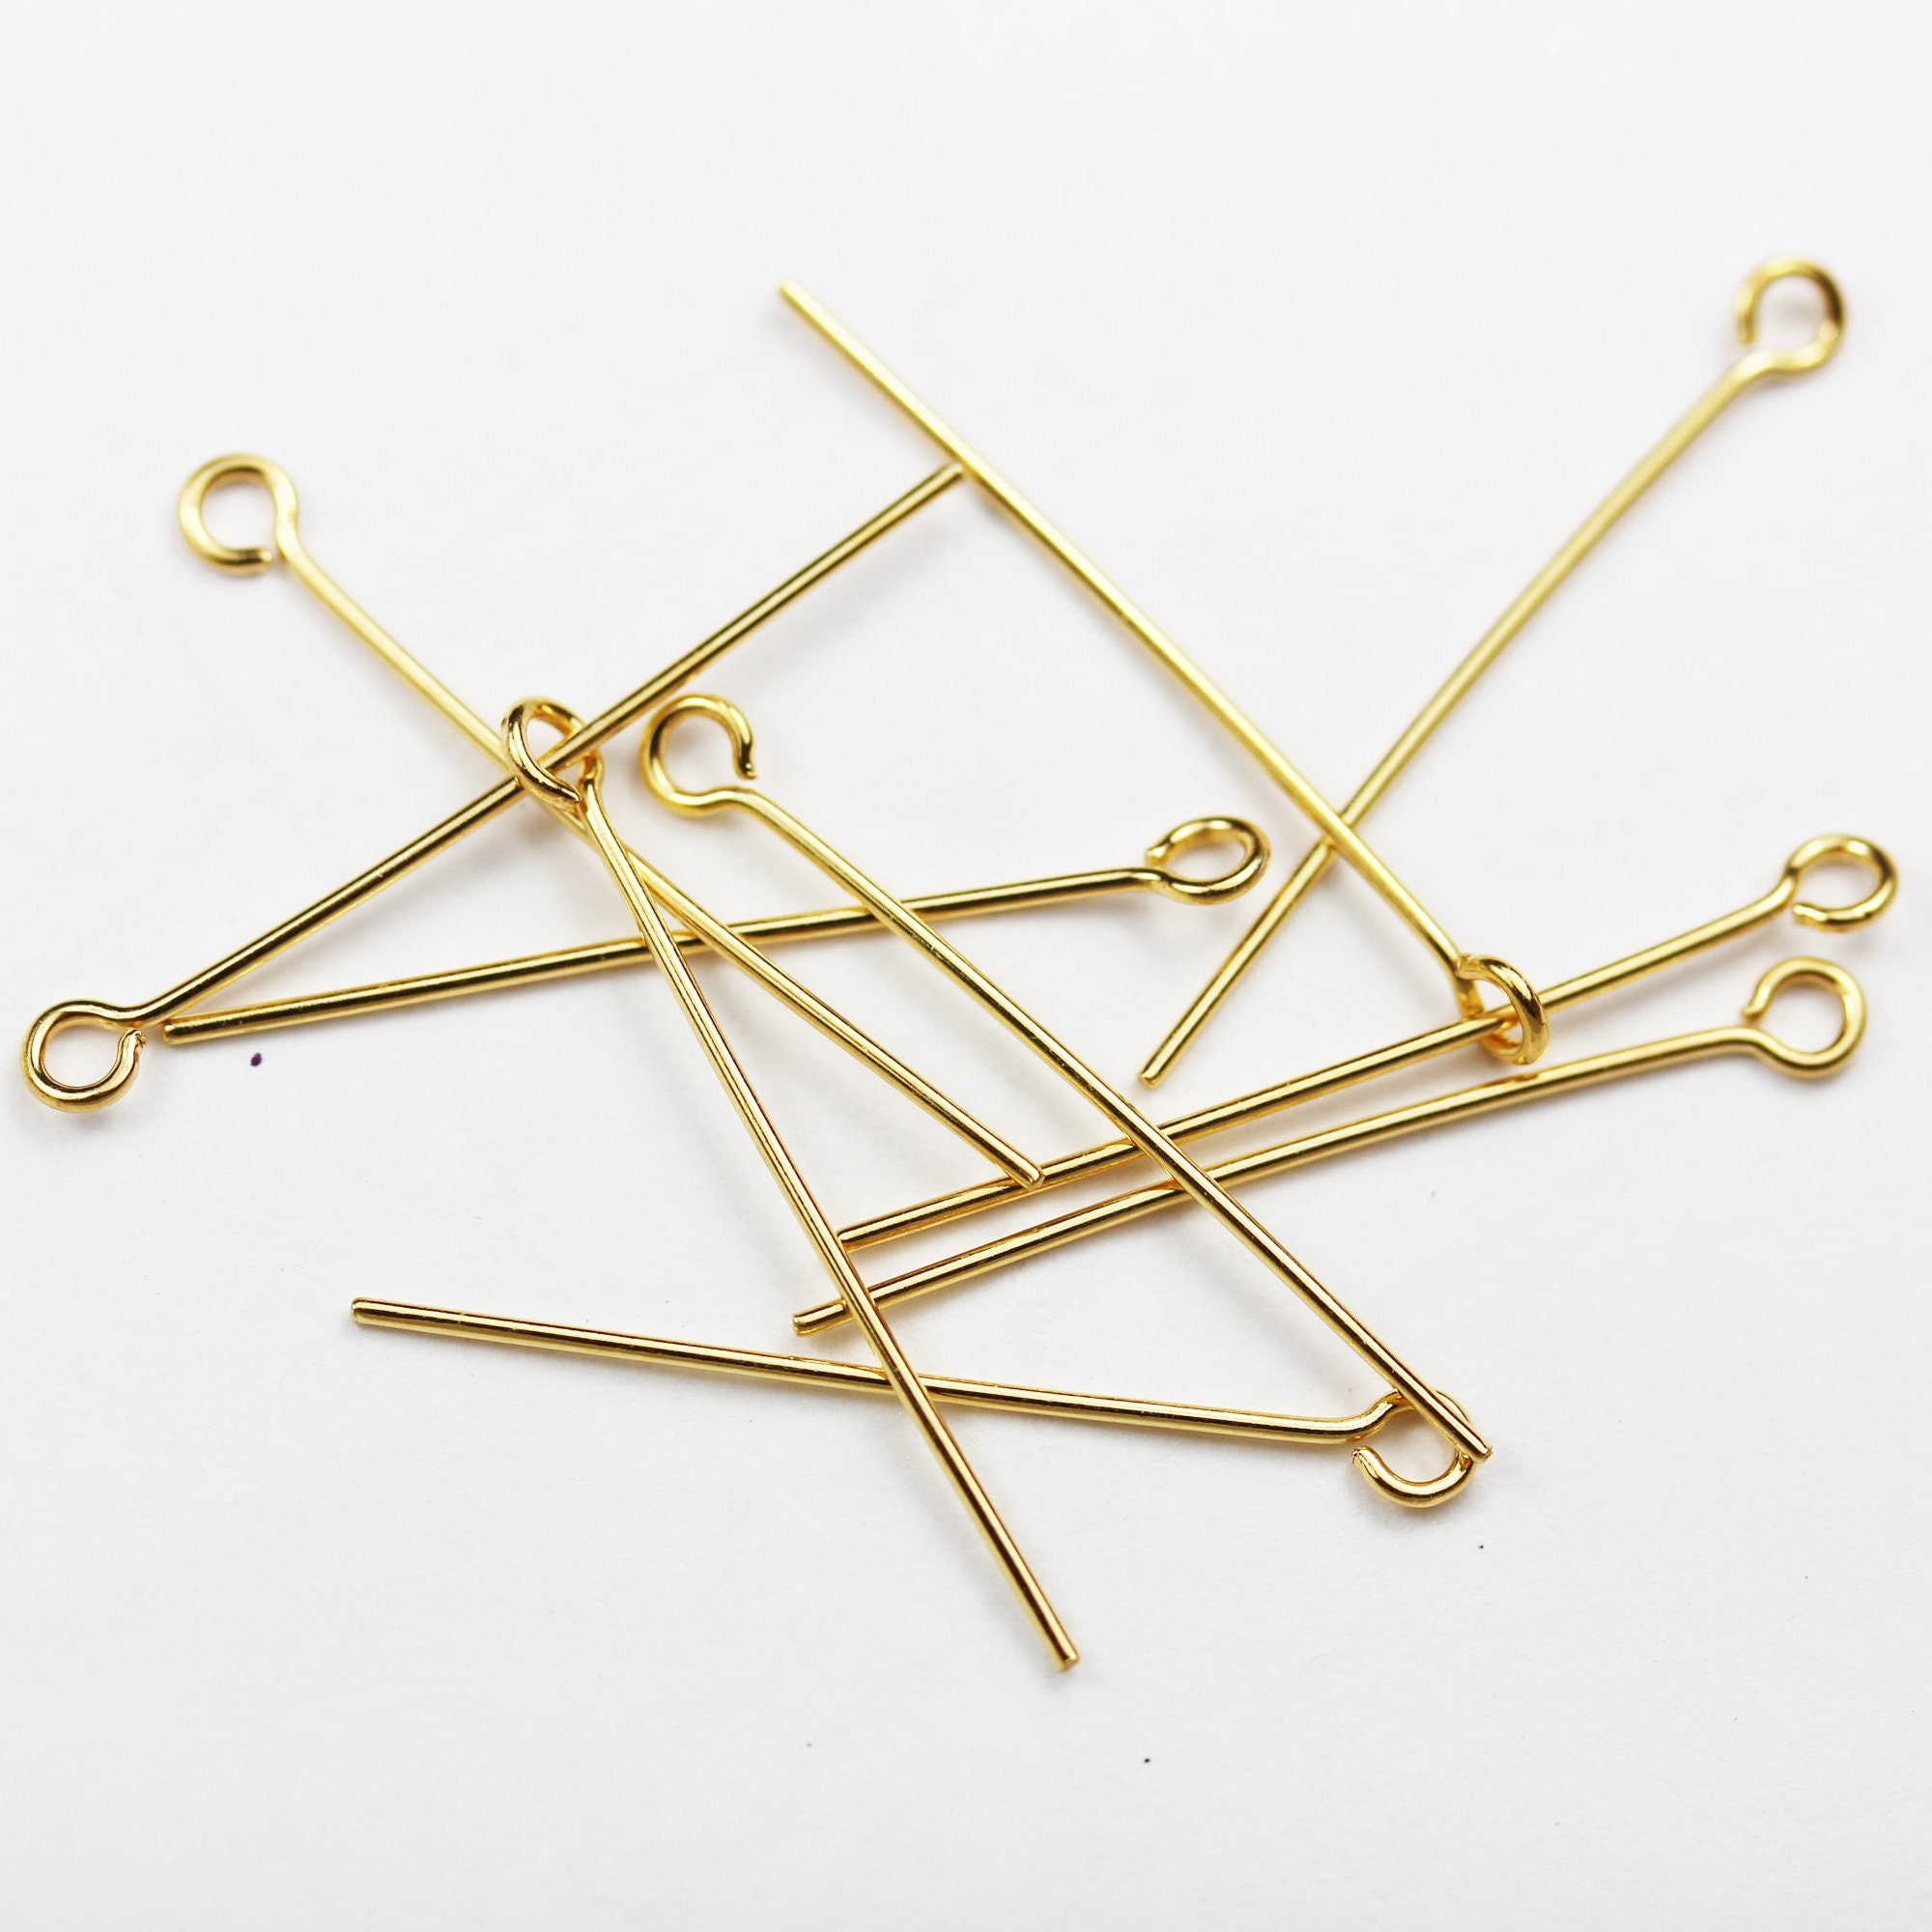 13-17mm Eye Pins, Gold Plated Eye Pins, Eyepins, Gold Head Pins